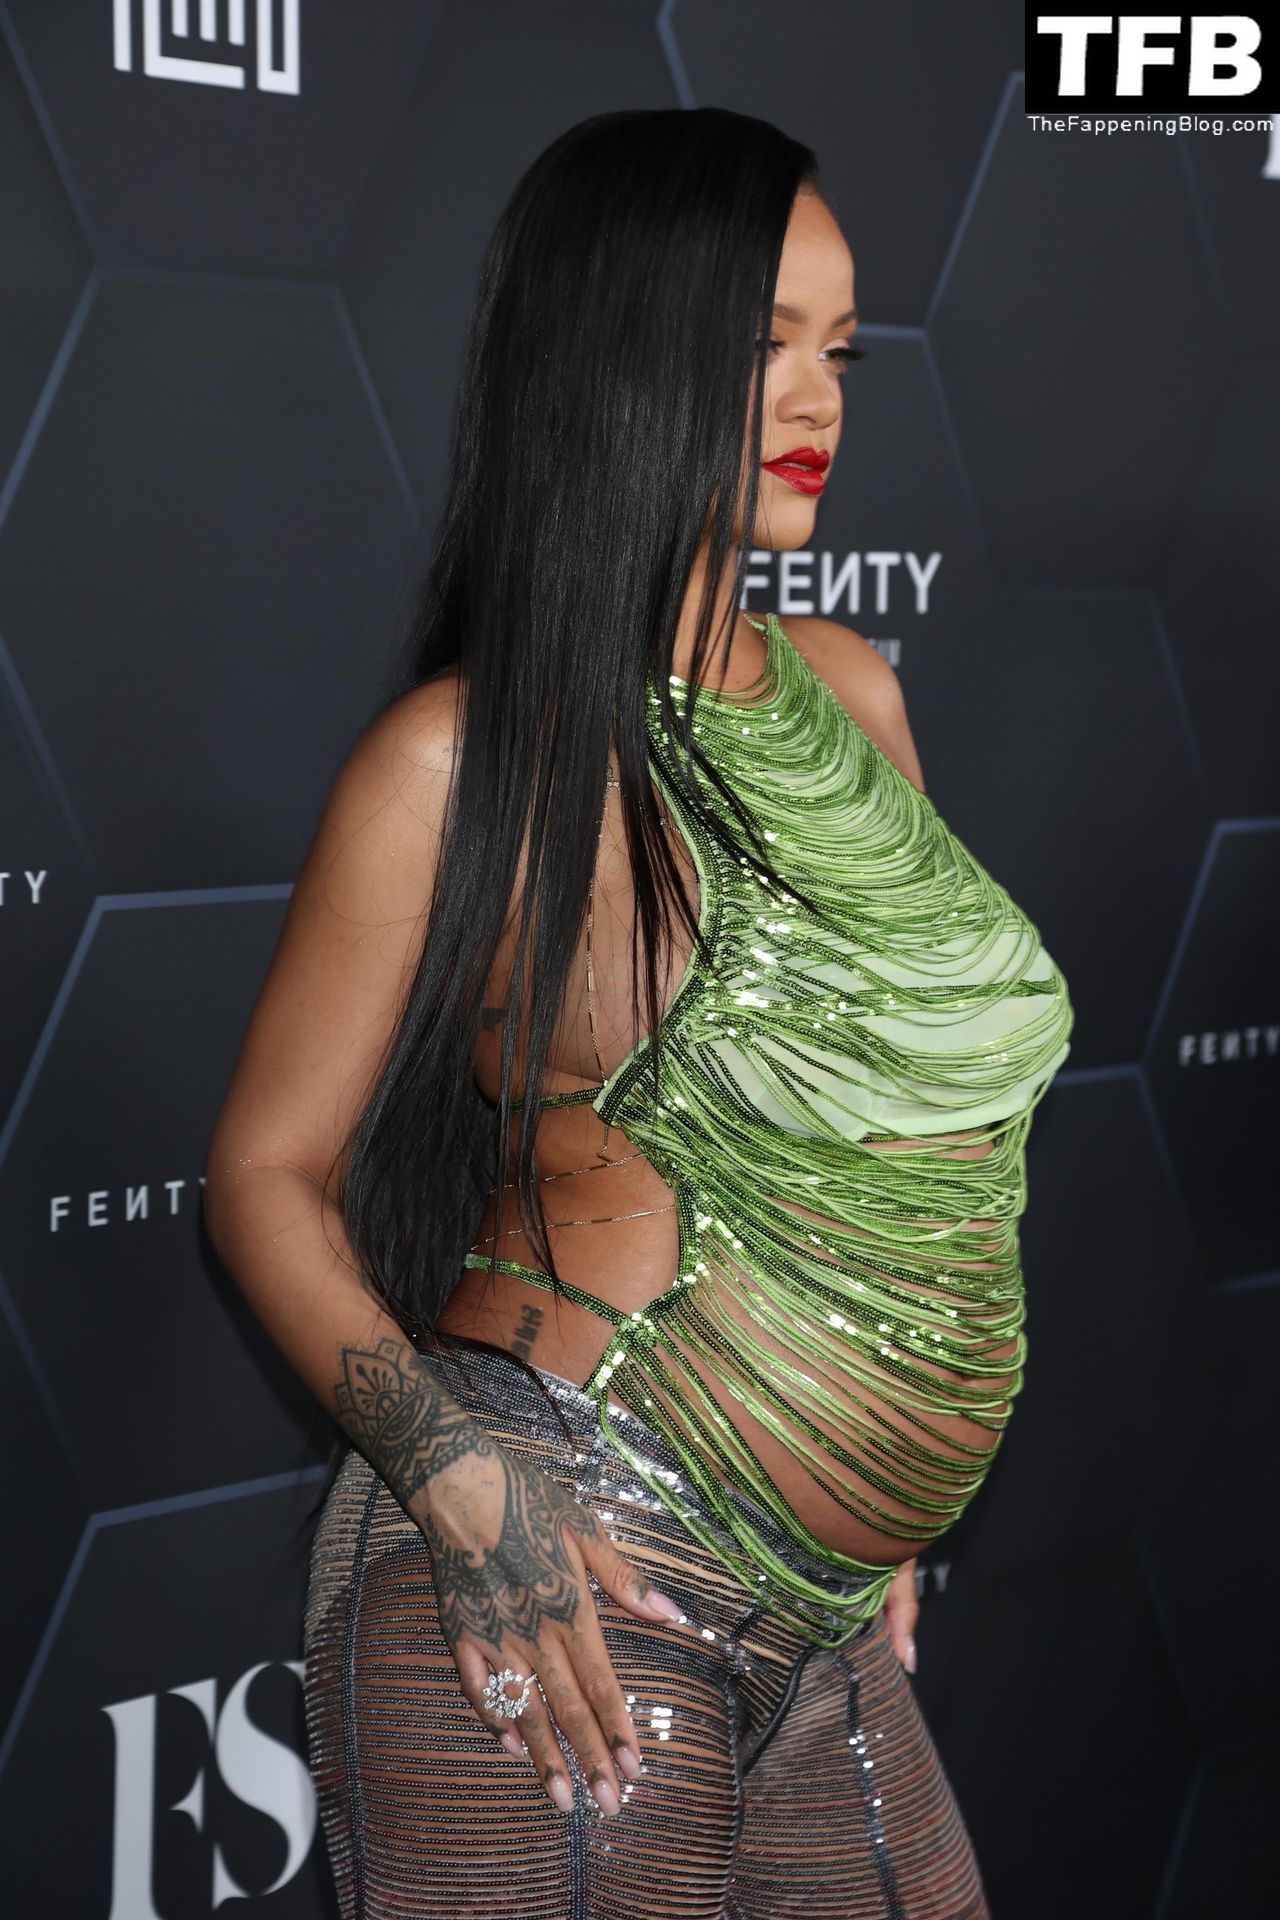 Rihanna-Sexy-The-Fappening-Blog-140.jpg